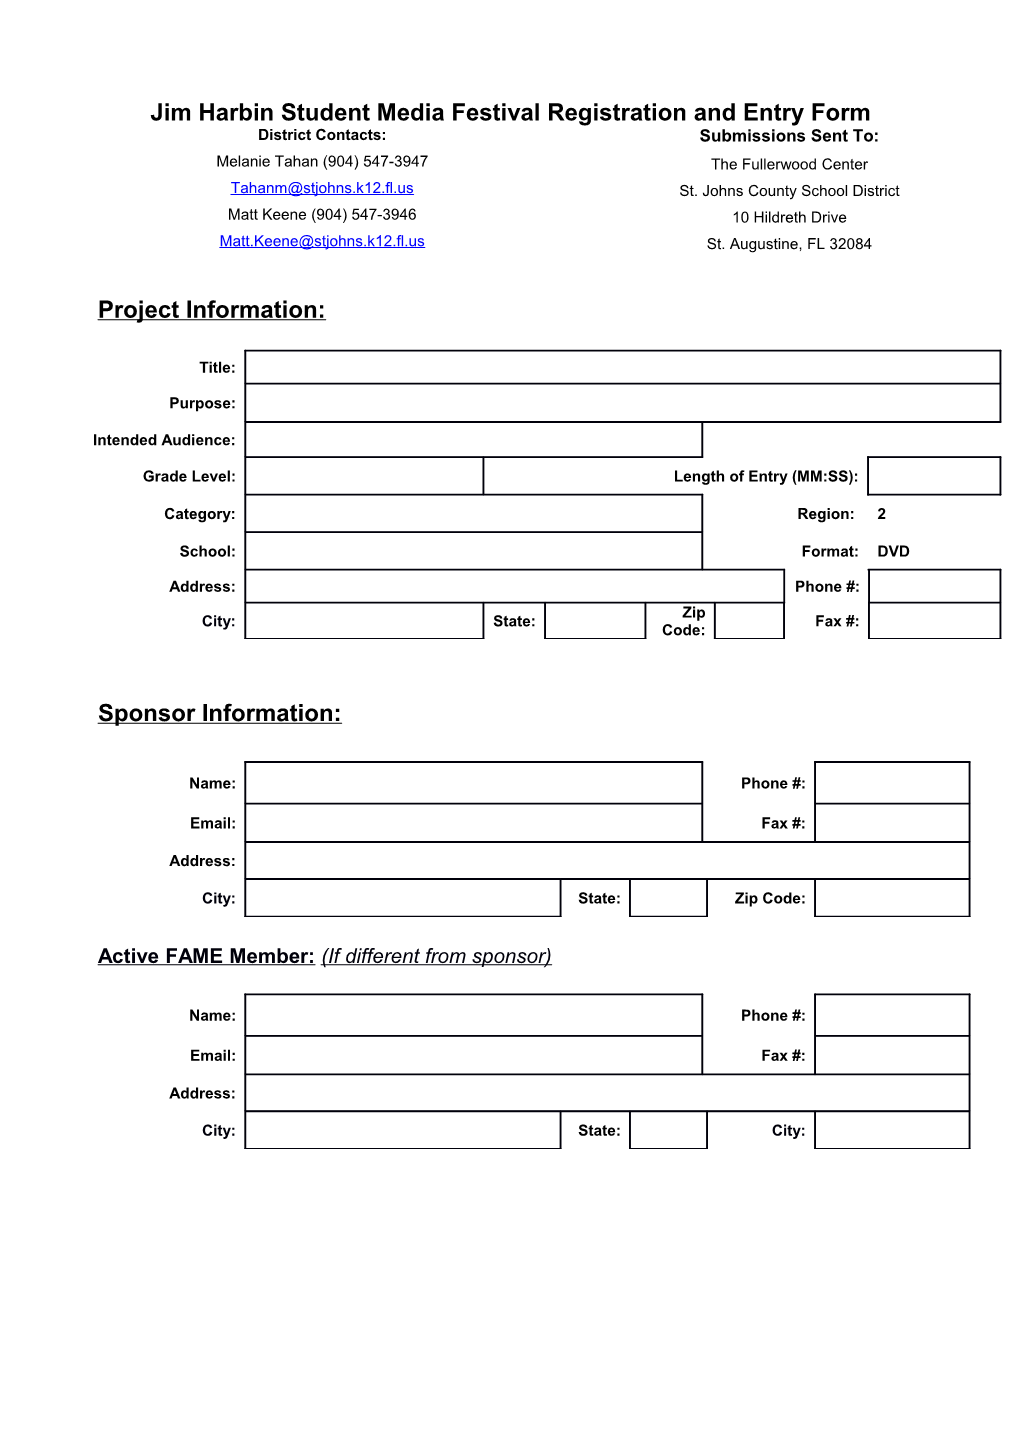 Jim Harbin Student Media Festival Registration and Entry Form